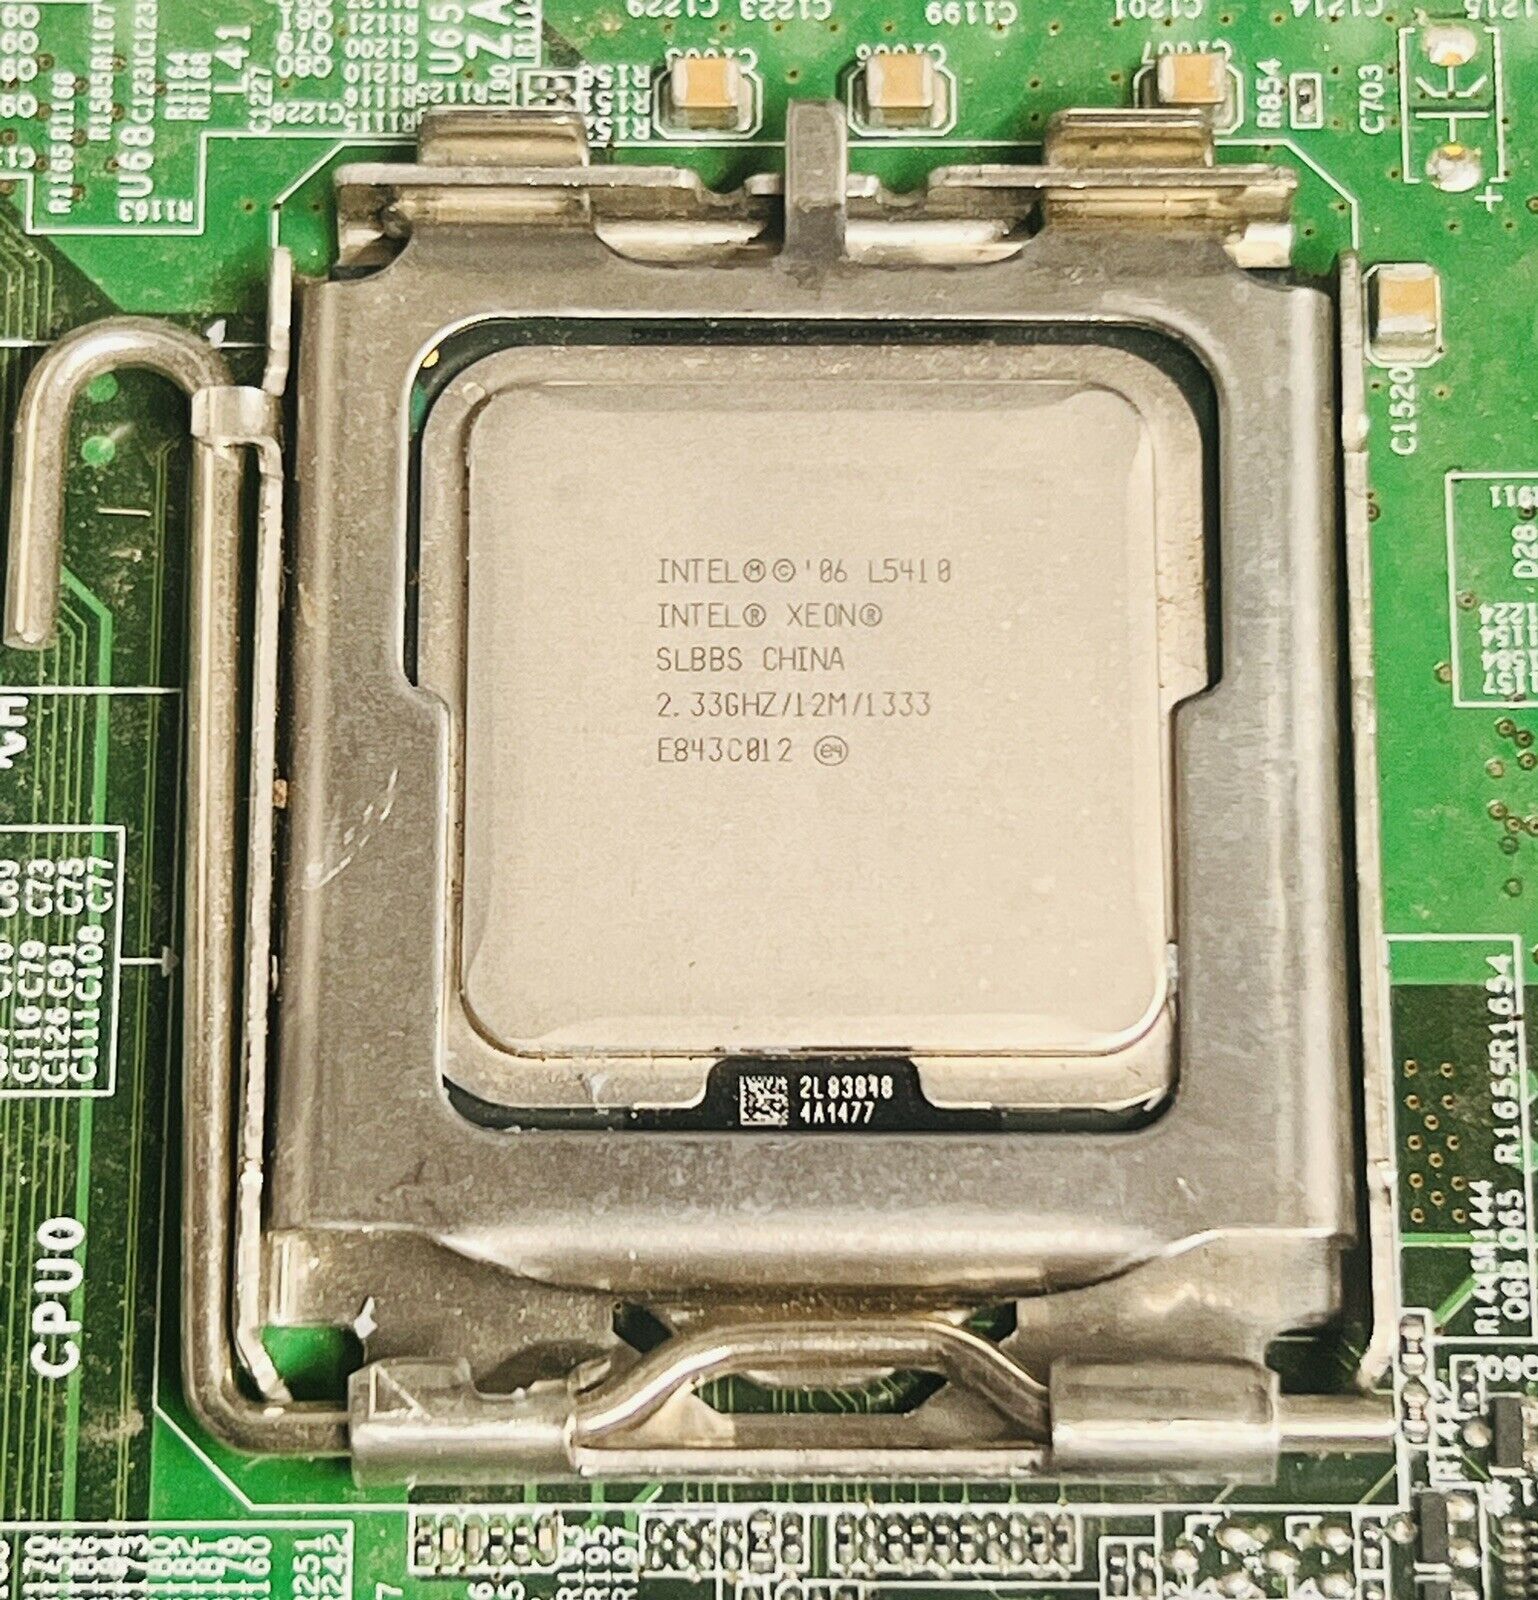 Intel Xeon L5410 Quad Core CPU Processor SLBBS